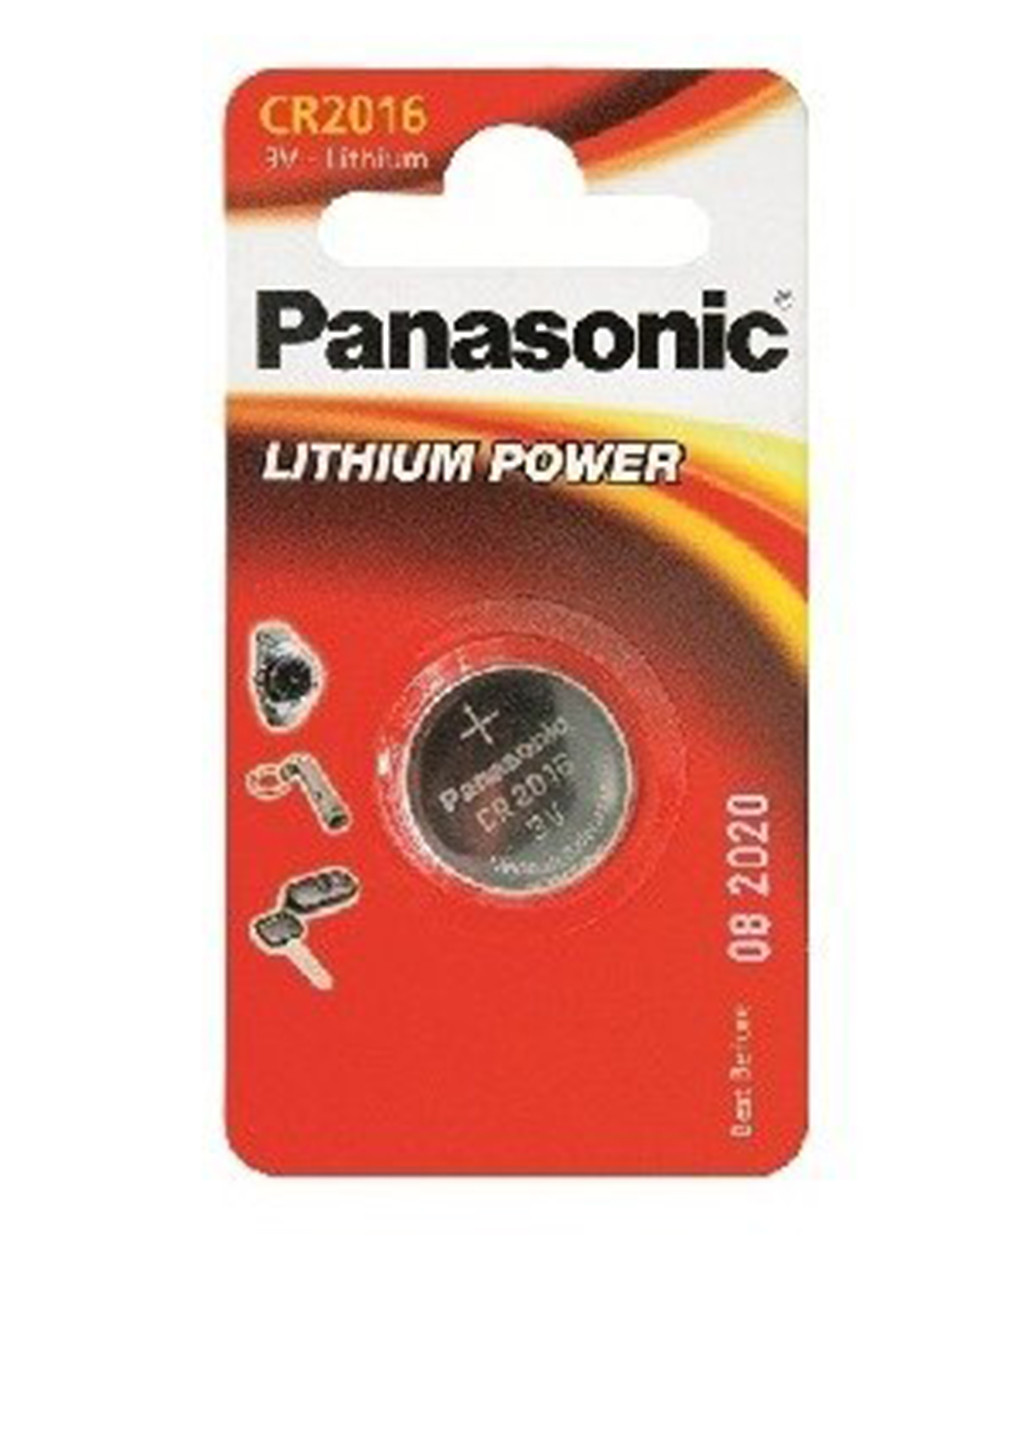 Батарейка CR 2016 BLI 1 LITHIUM (CR-2016EL / 1B) Panasonic cr 2016 bli 1 lithium (cr-2016el/1b) (138004356)